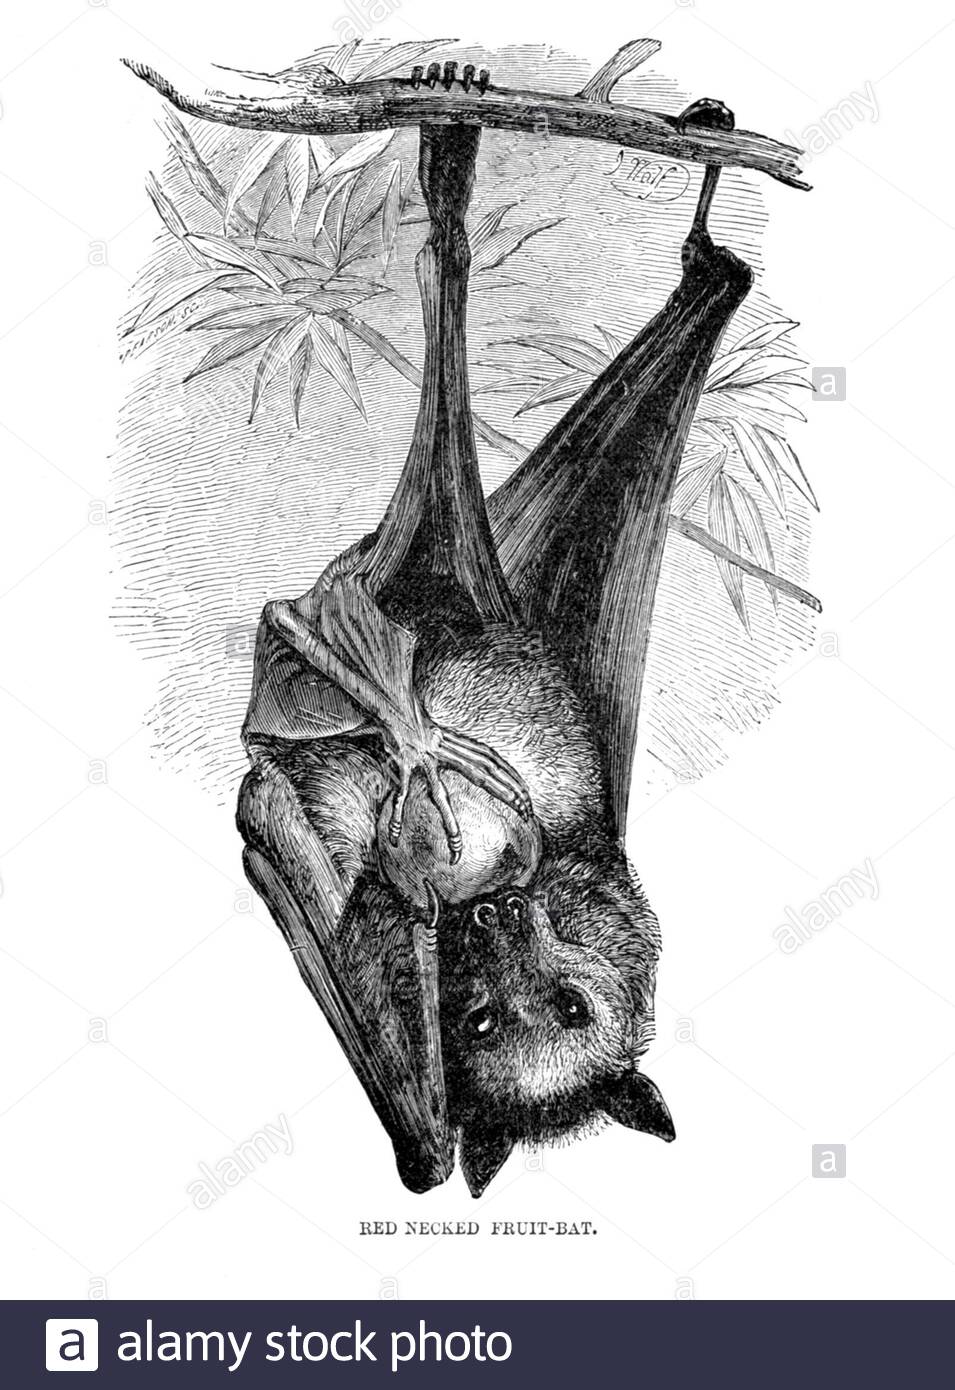 Red Necked Fruit Bat, vintage illustration from 1893 Stock Photo